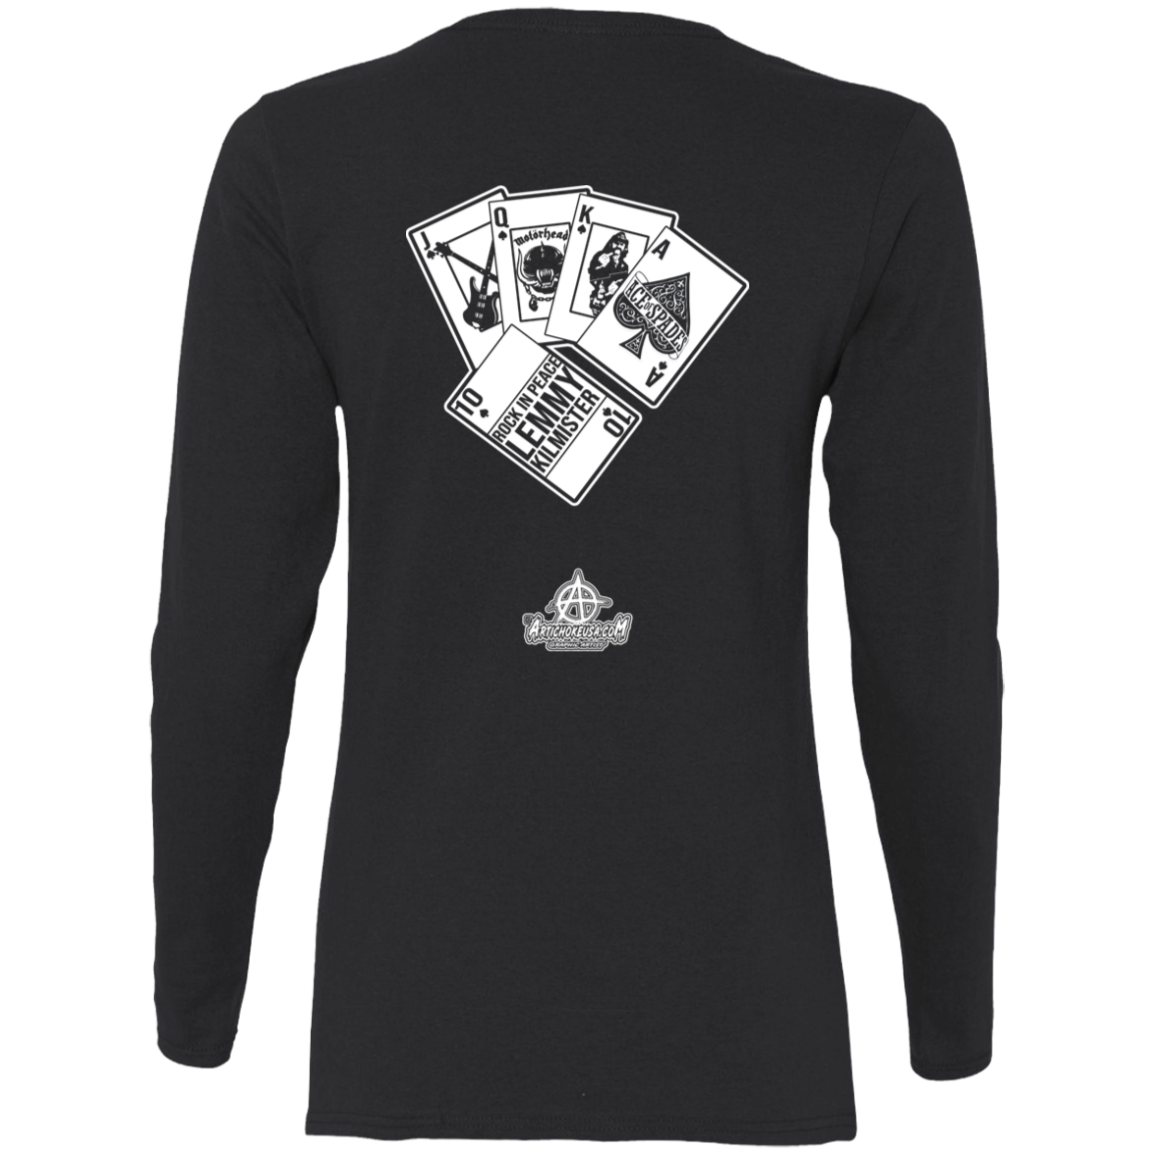 ArtichokeUSA Custom Design. Motorhead's Lemmy Kilmister's Favorite Video Poker Machine. Rock in Peace! Ladies' Cotton LS T-Shirt